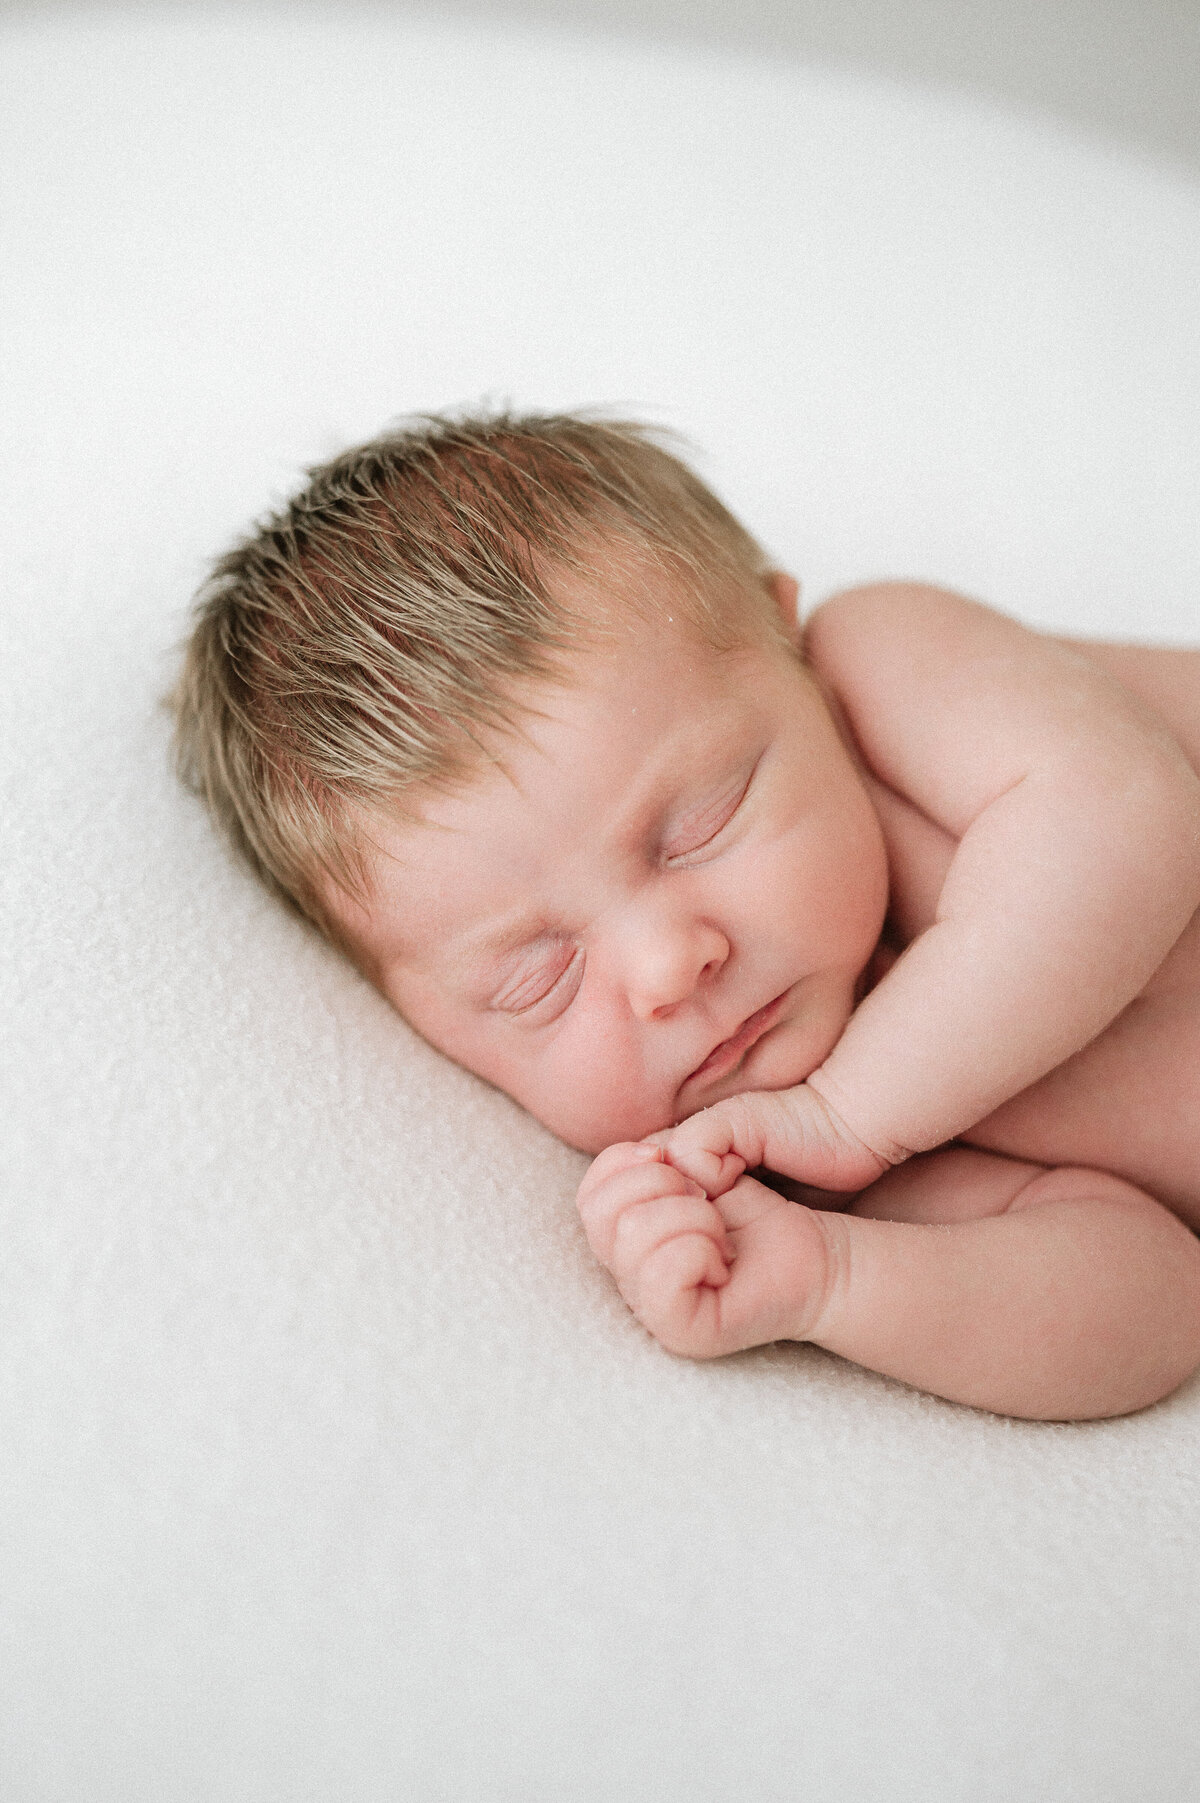 Stylish photography of a sleeping newborn baby